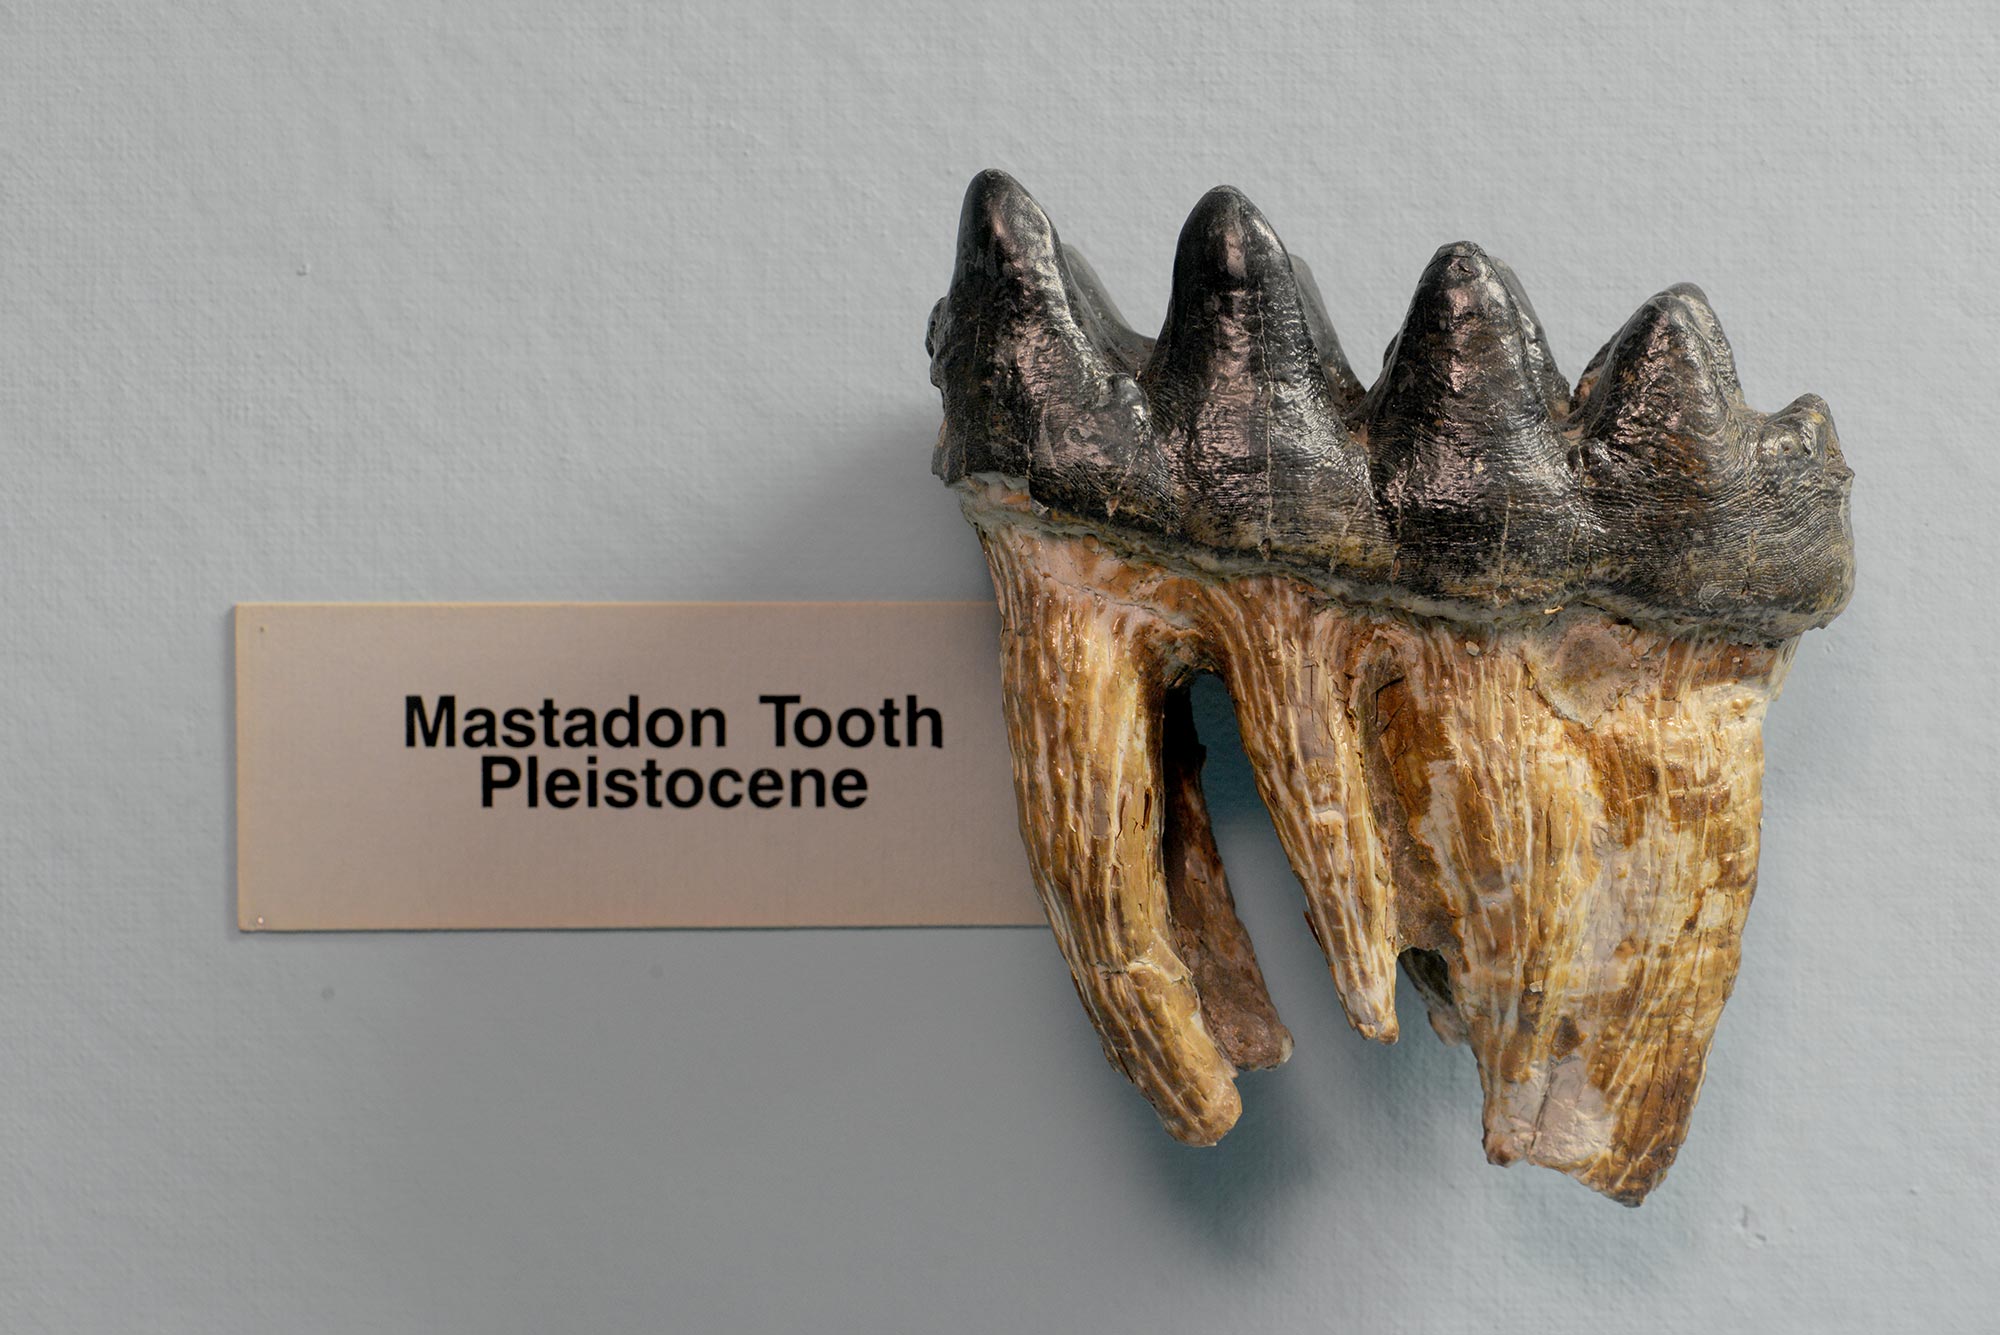 Fossil of mastodon tooth